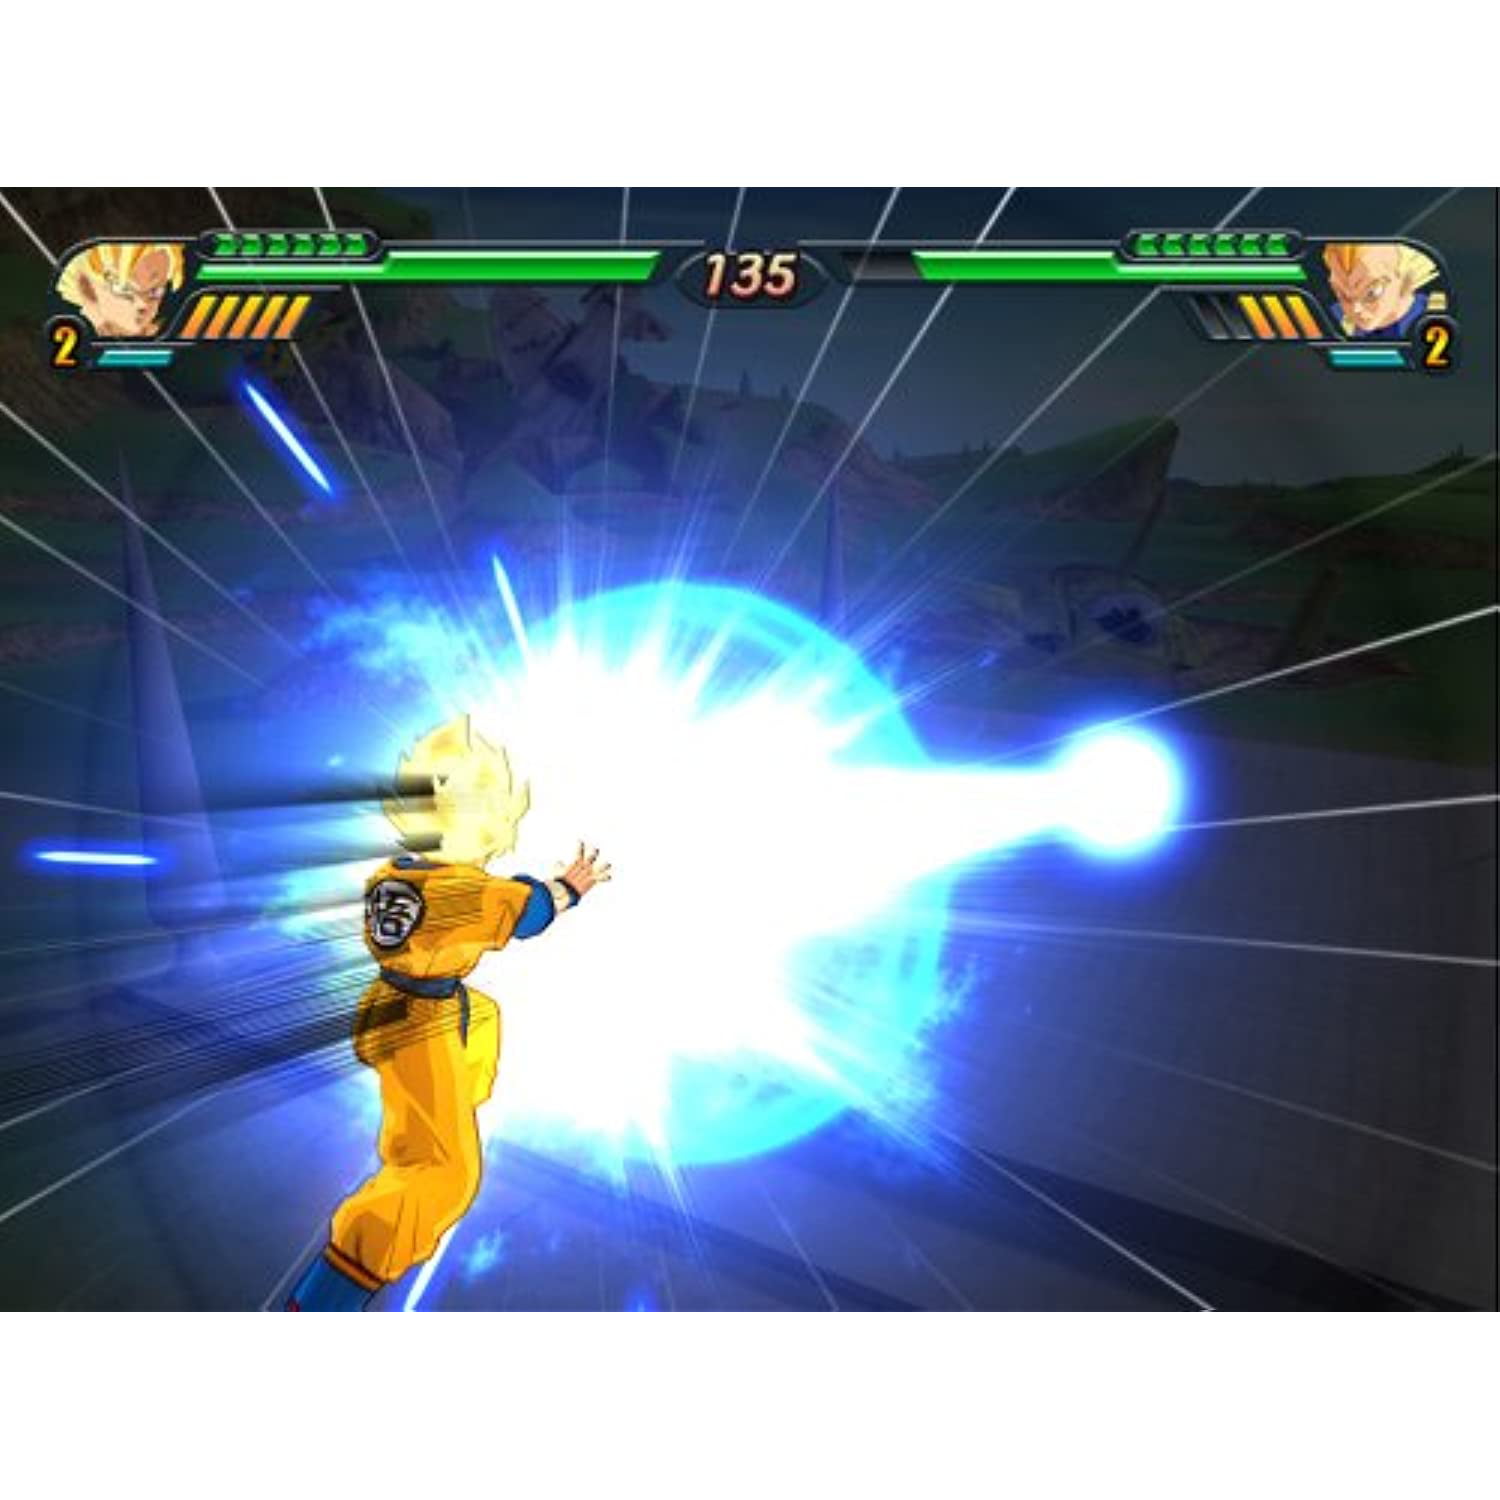 PlayStation 2 - Dragon Ball Z: Budokai Tenkaichi 3 - Goku - The